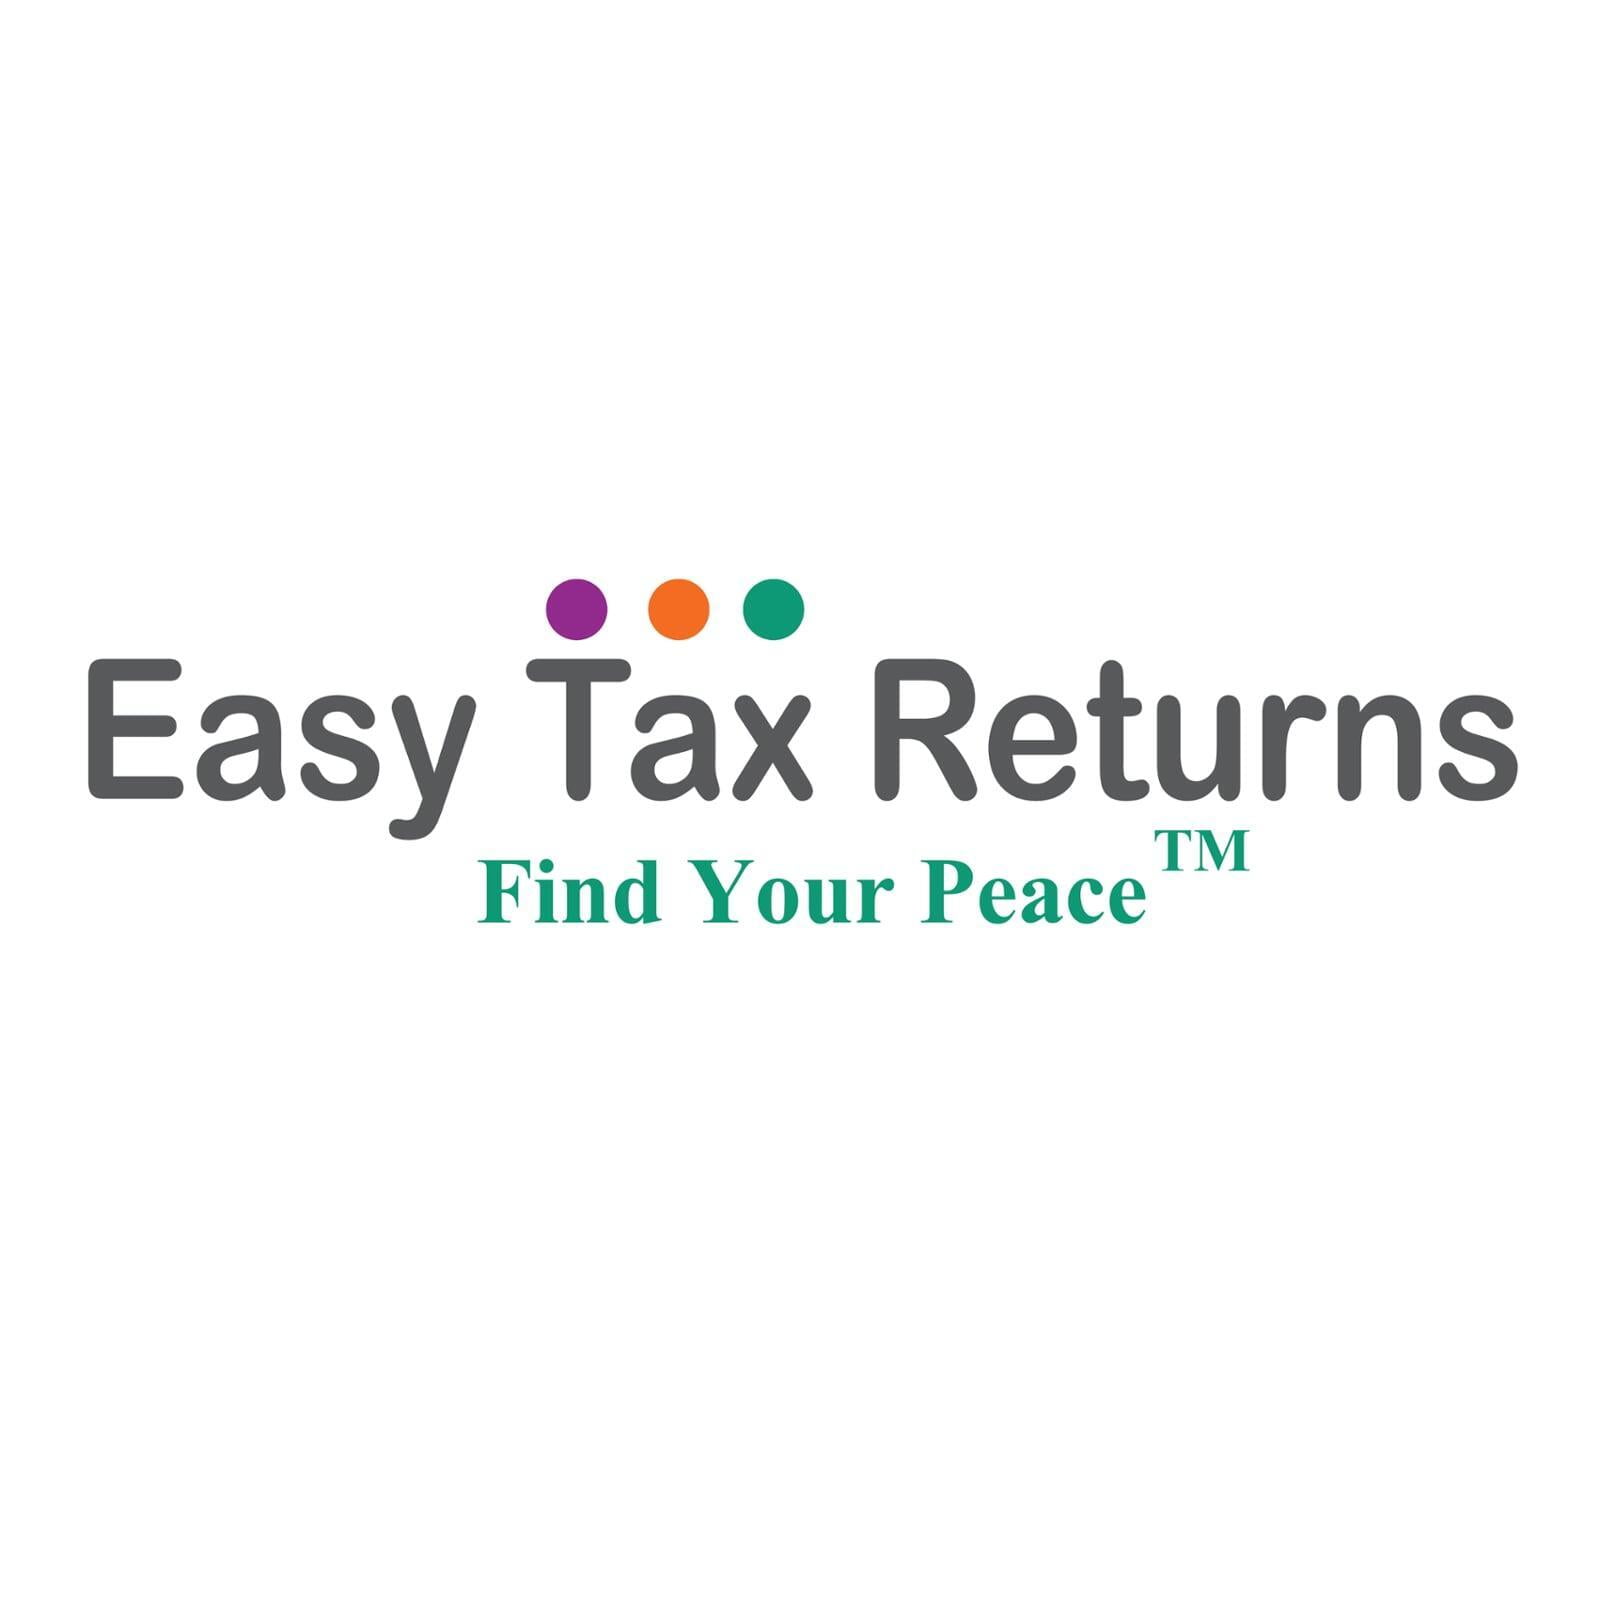 Easy Tax Returns